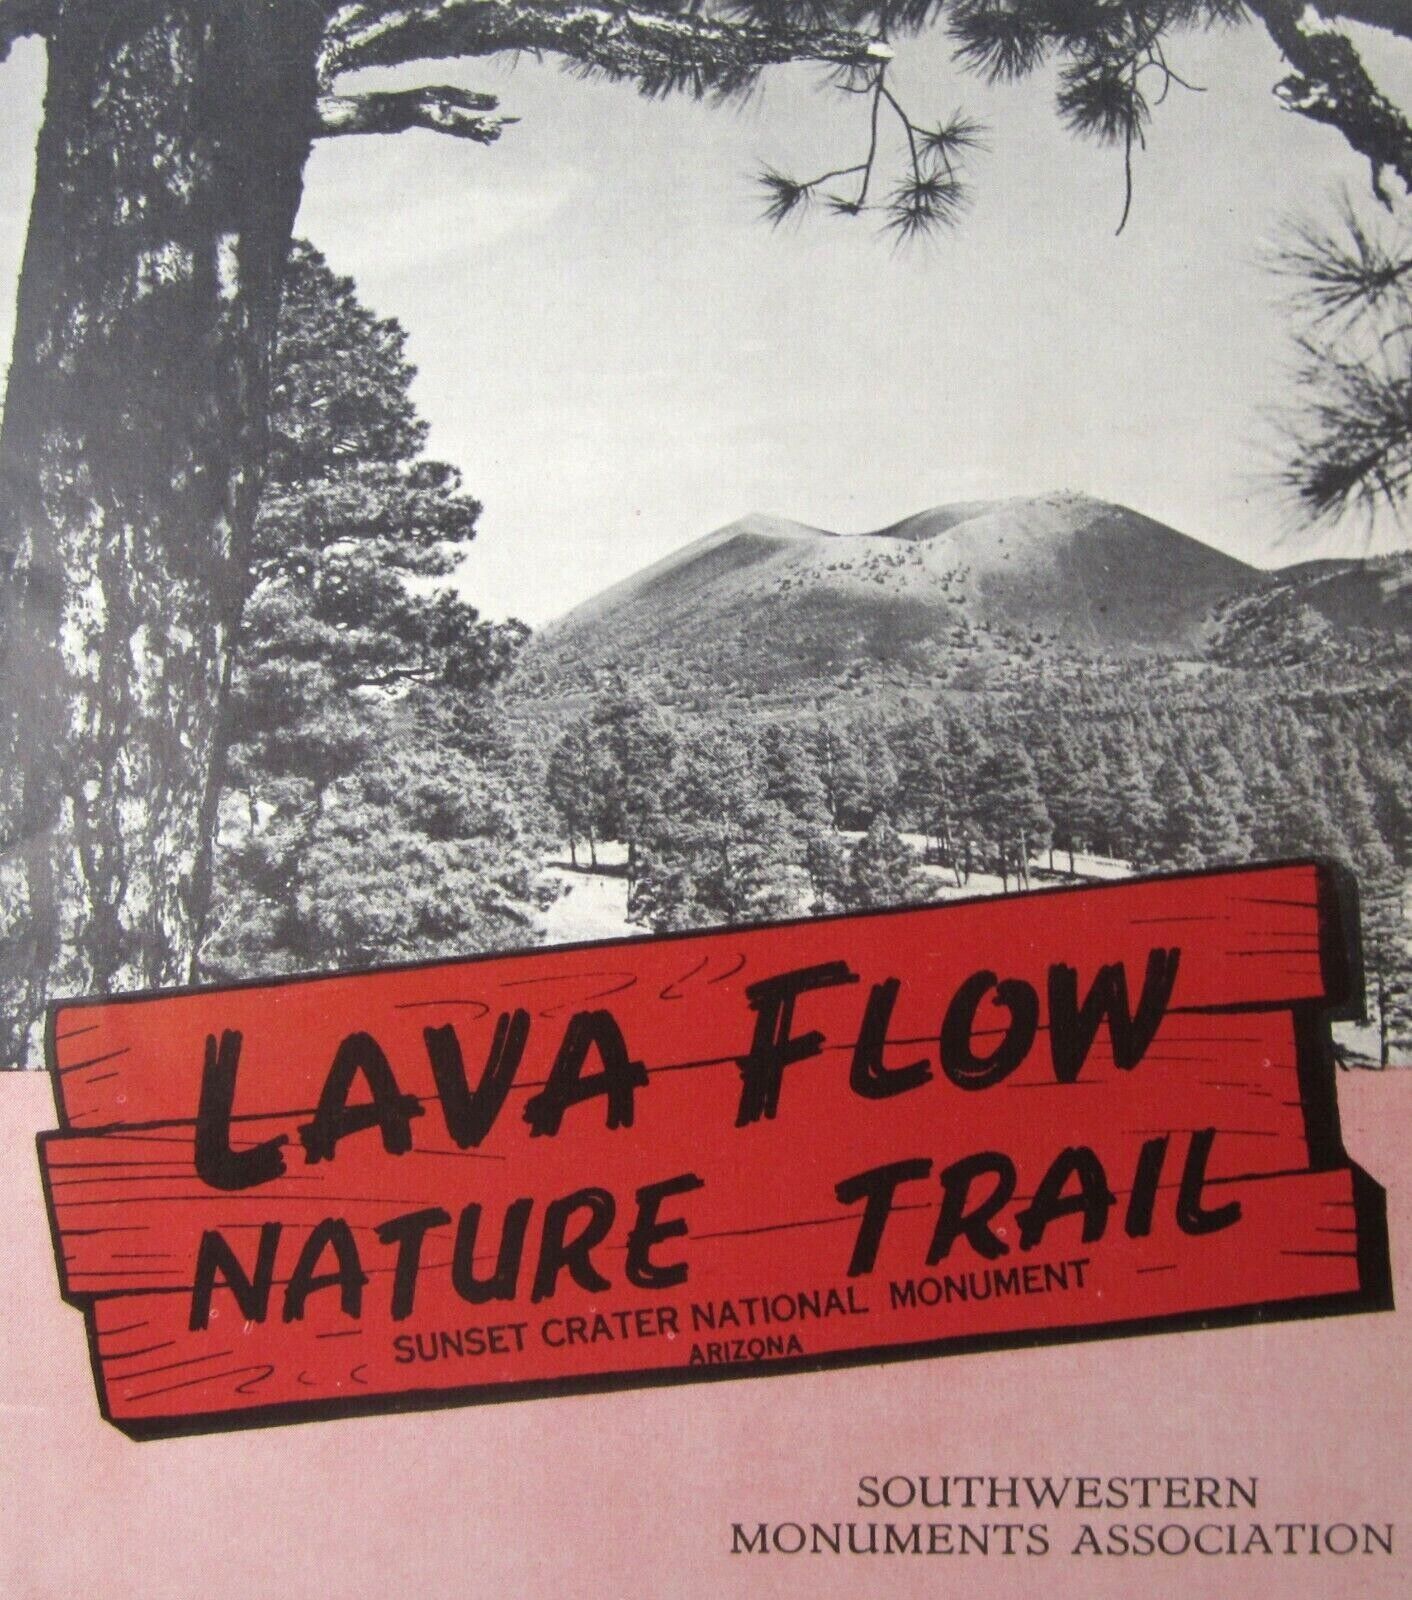 Vintage Arizona Desert Travel Brochure Lava Flow Nature Trail Sunset Crater 1954